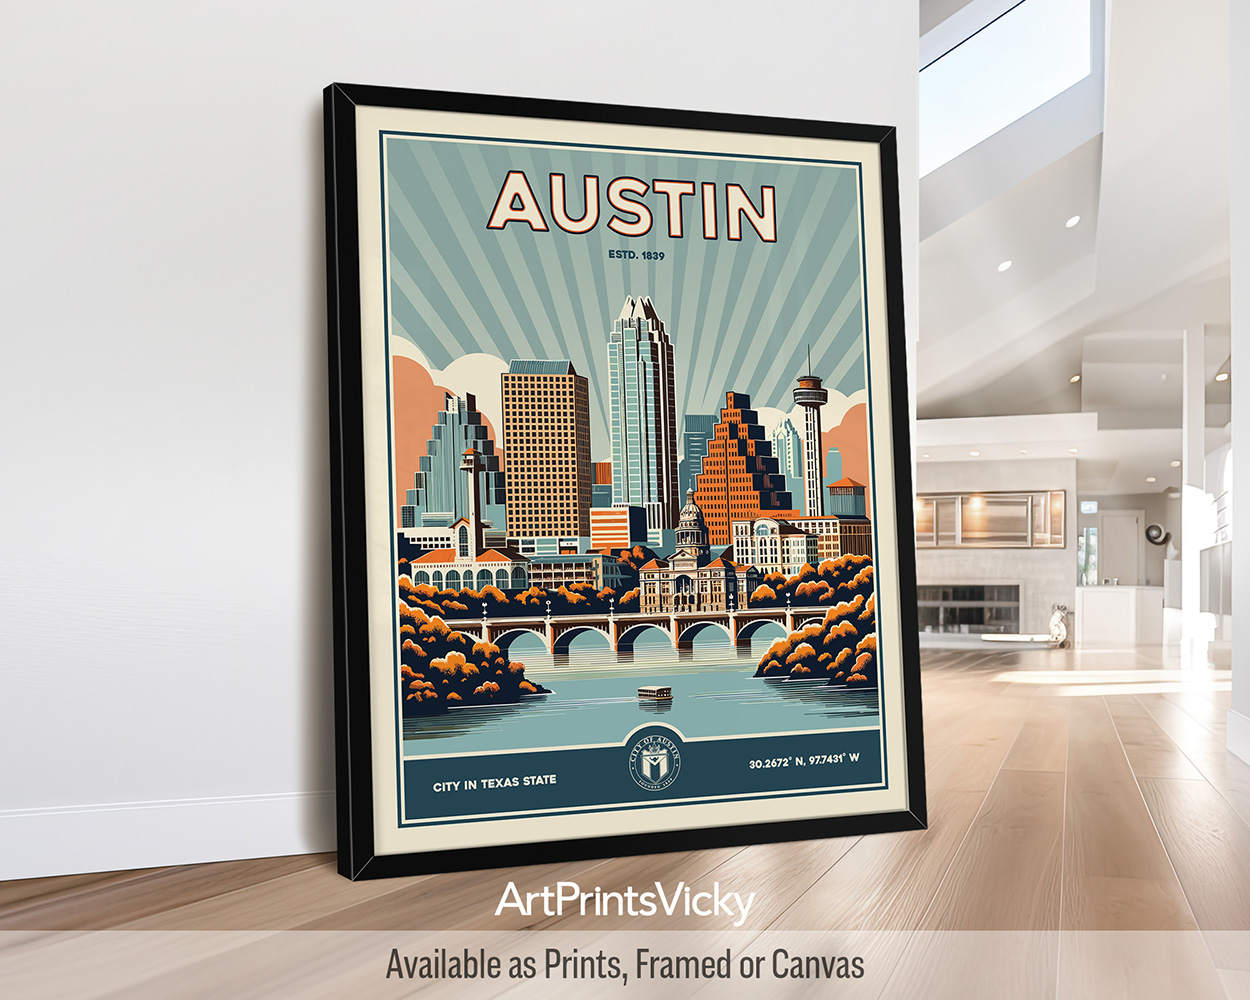 Austin Poster Inspired by Retro Travel Art